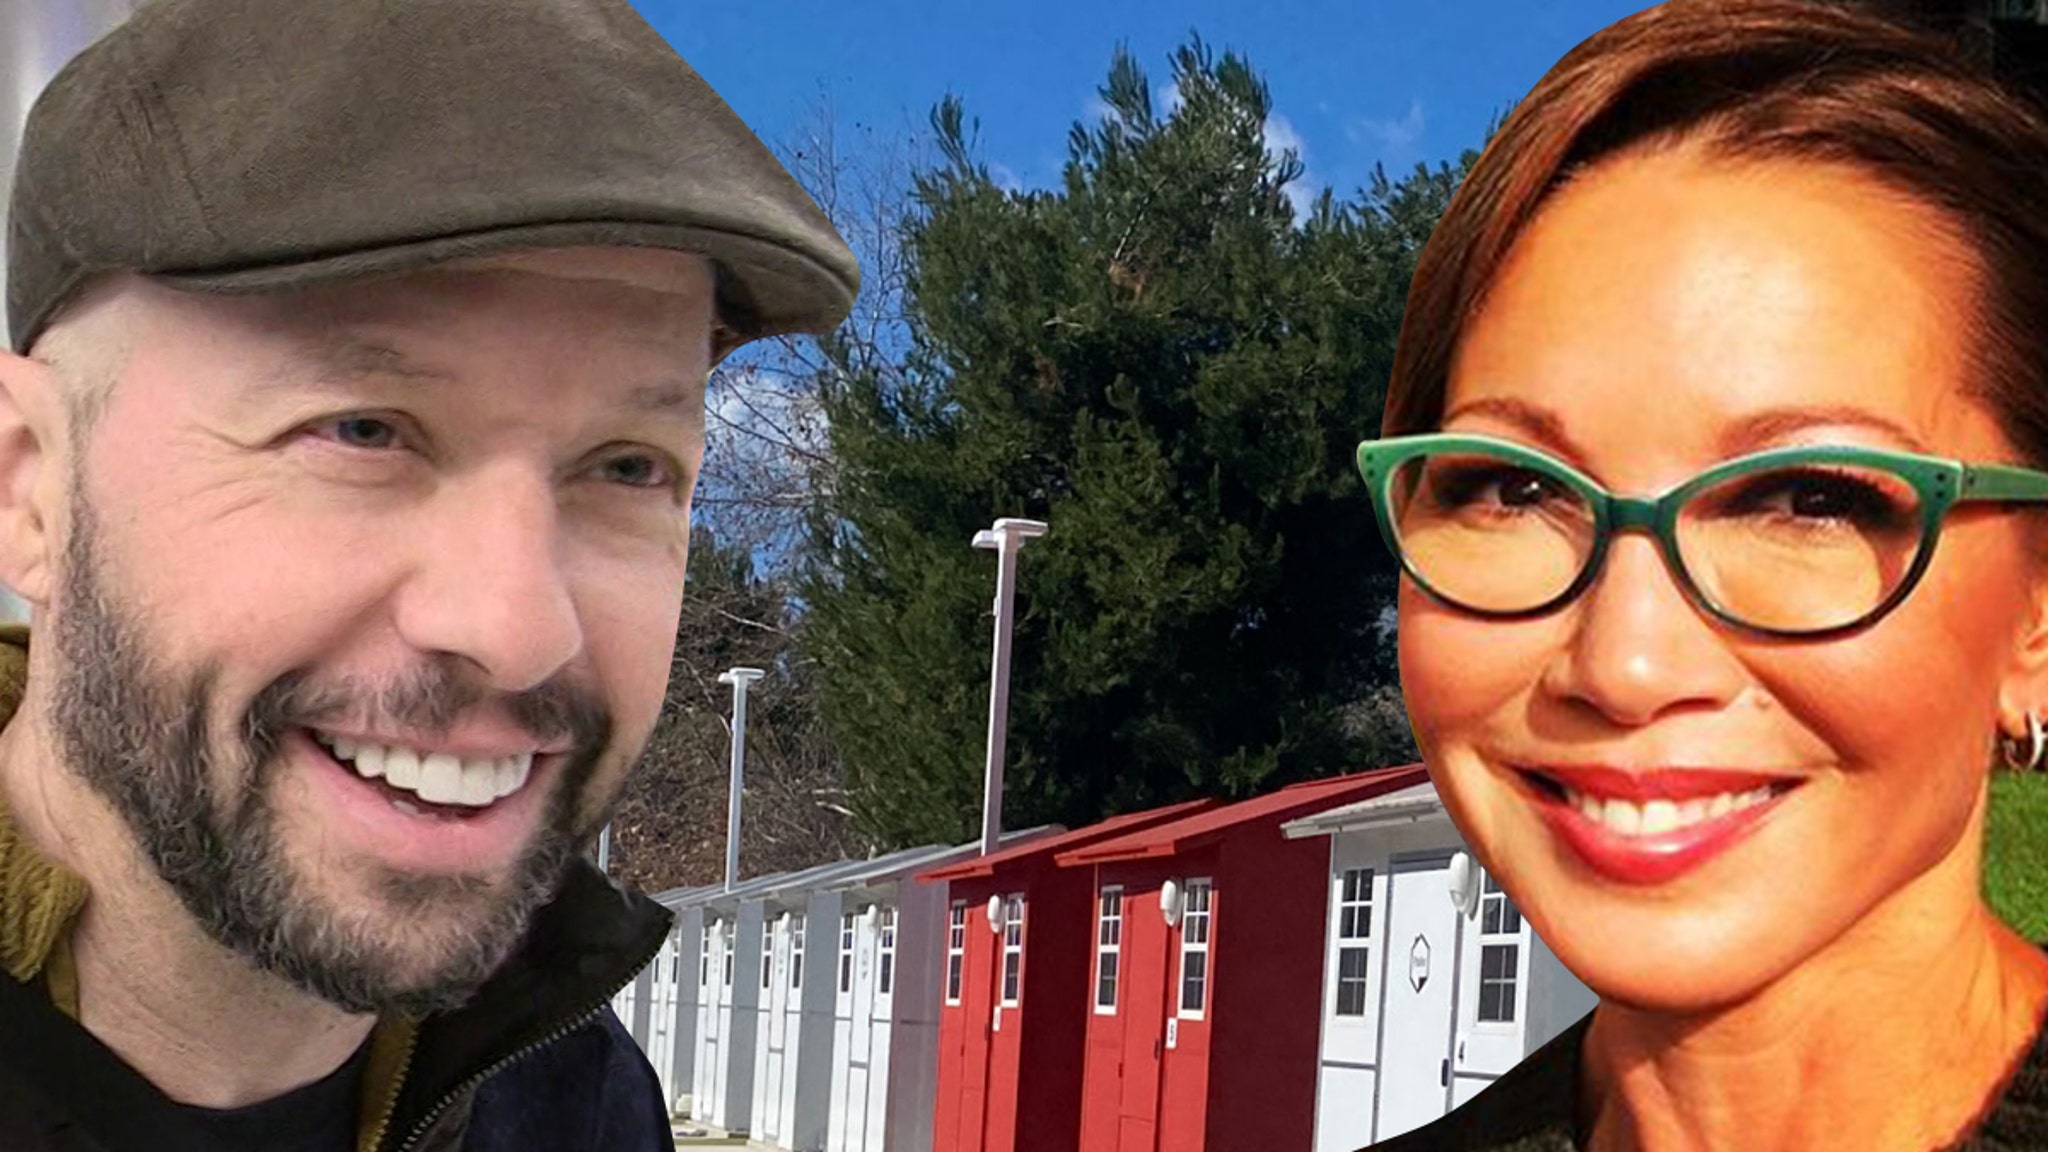 Jon Cryer and wife Lisa Joyner help build small homes for the homeless